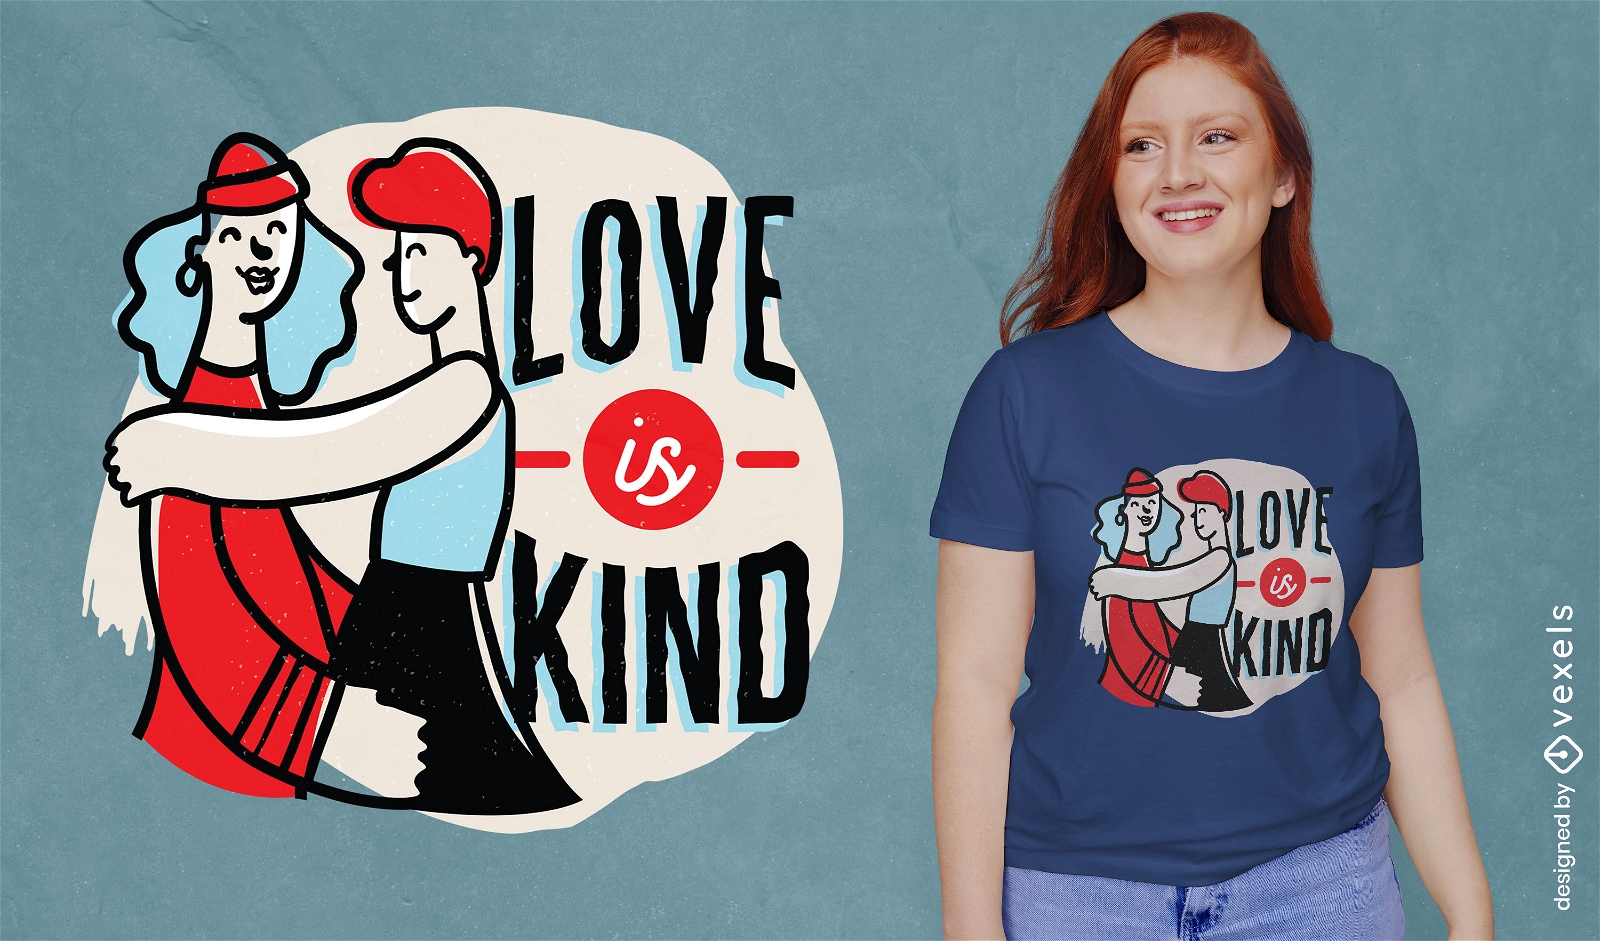 Love is love lesbian couple t-shirt design